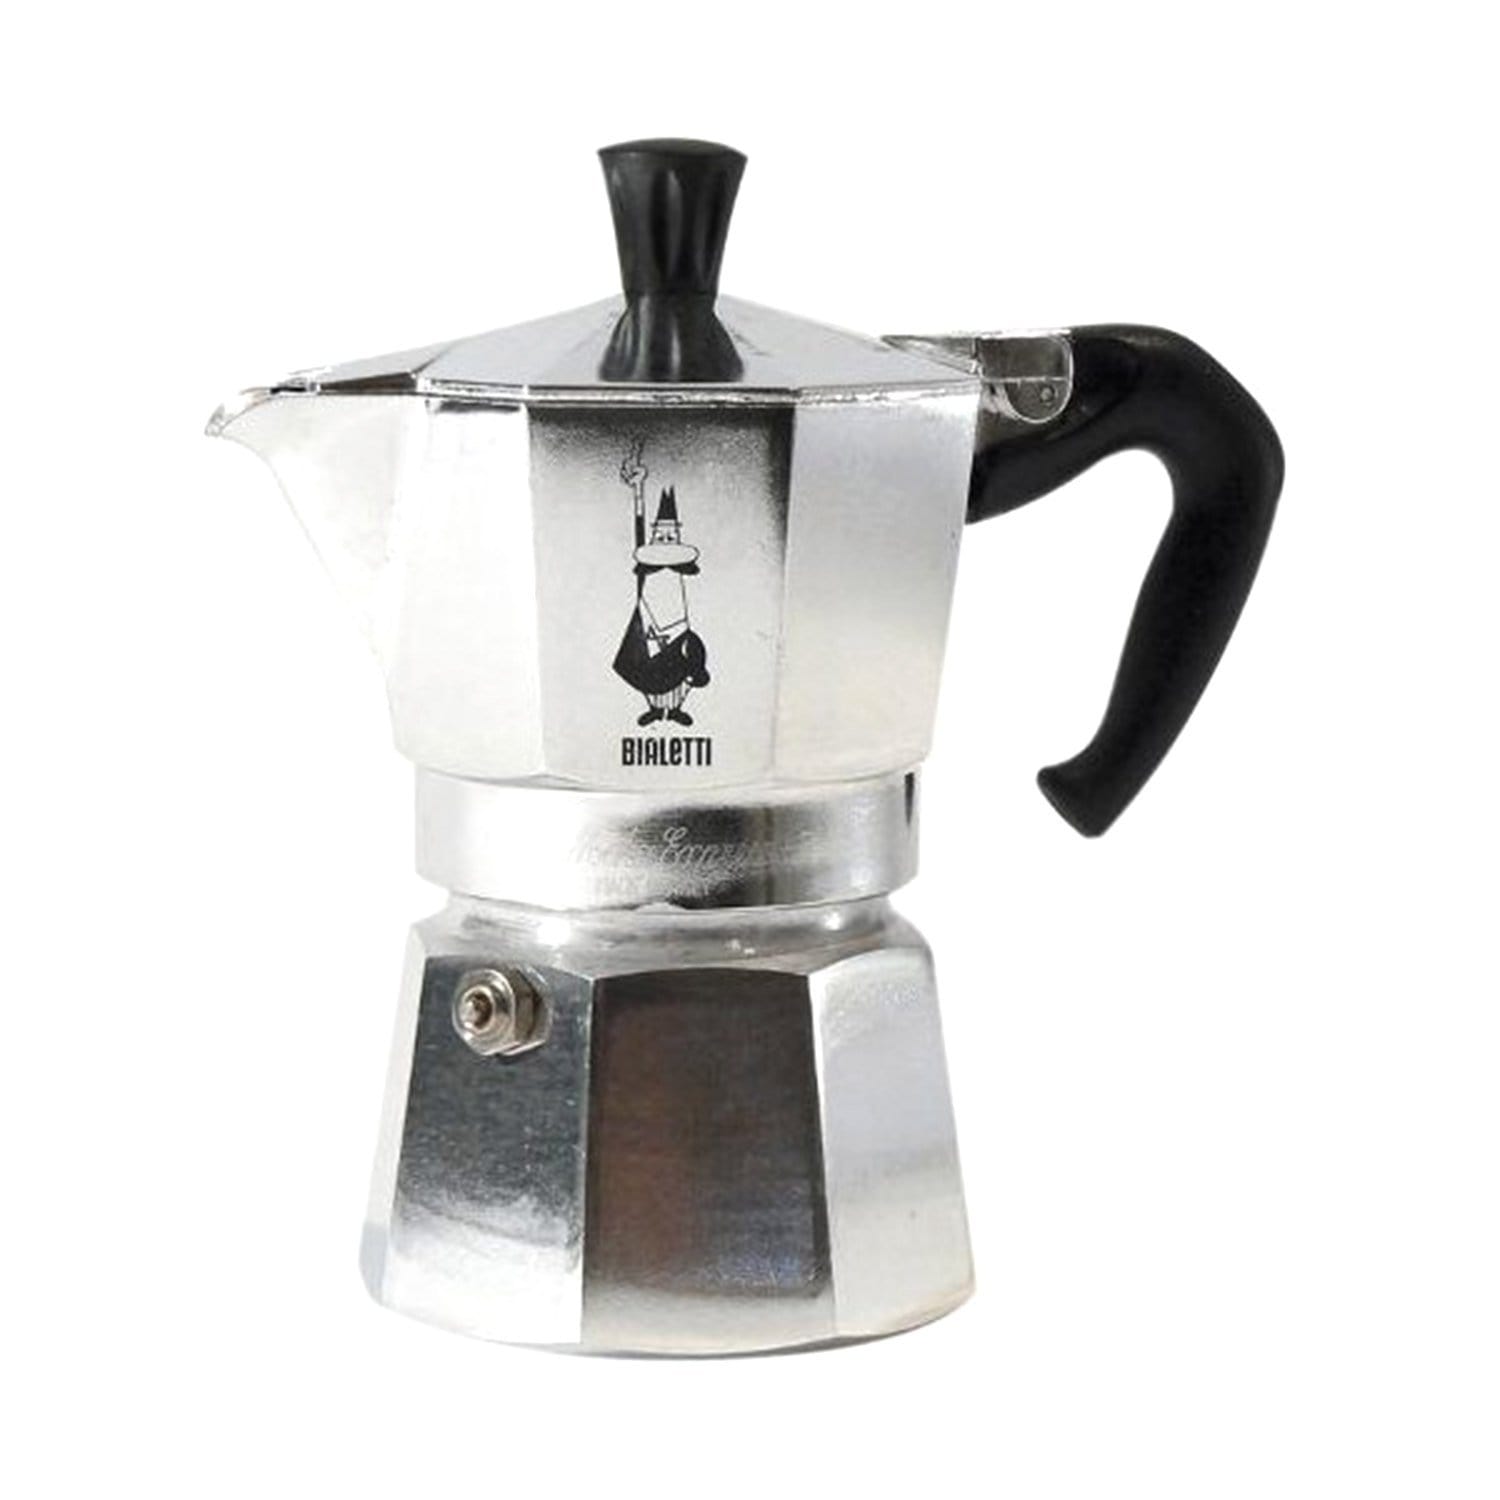 Bialetti Moka Express Coffee Maker - Silver, 3 Cups - 1162 - Jashanmal Home